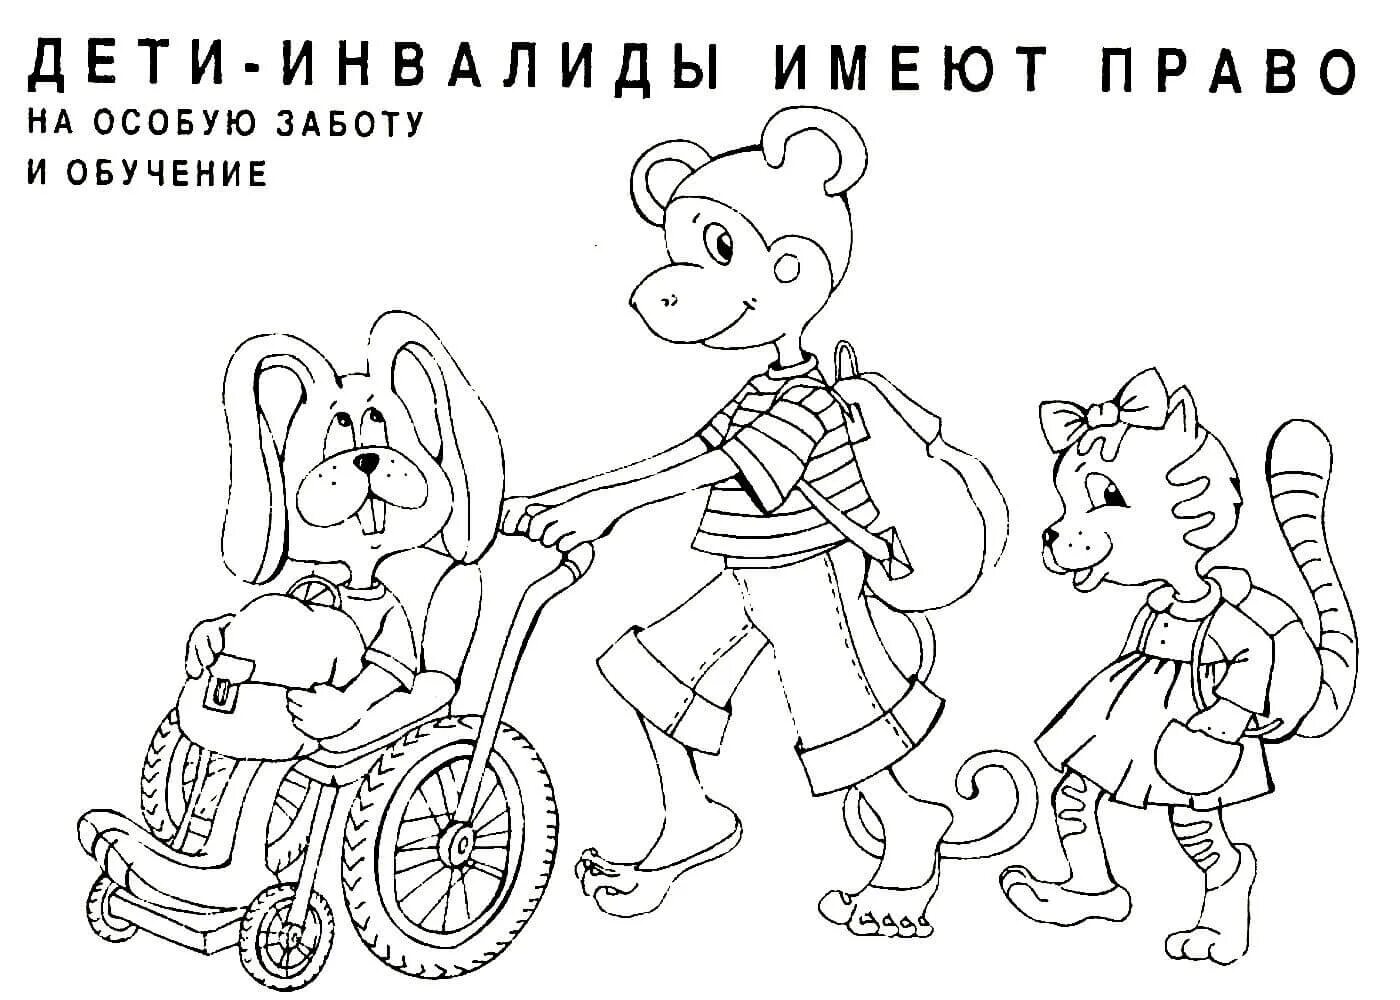 Russian constitution for children #12